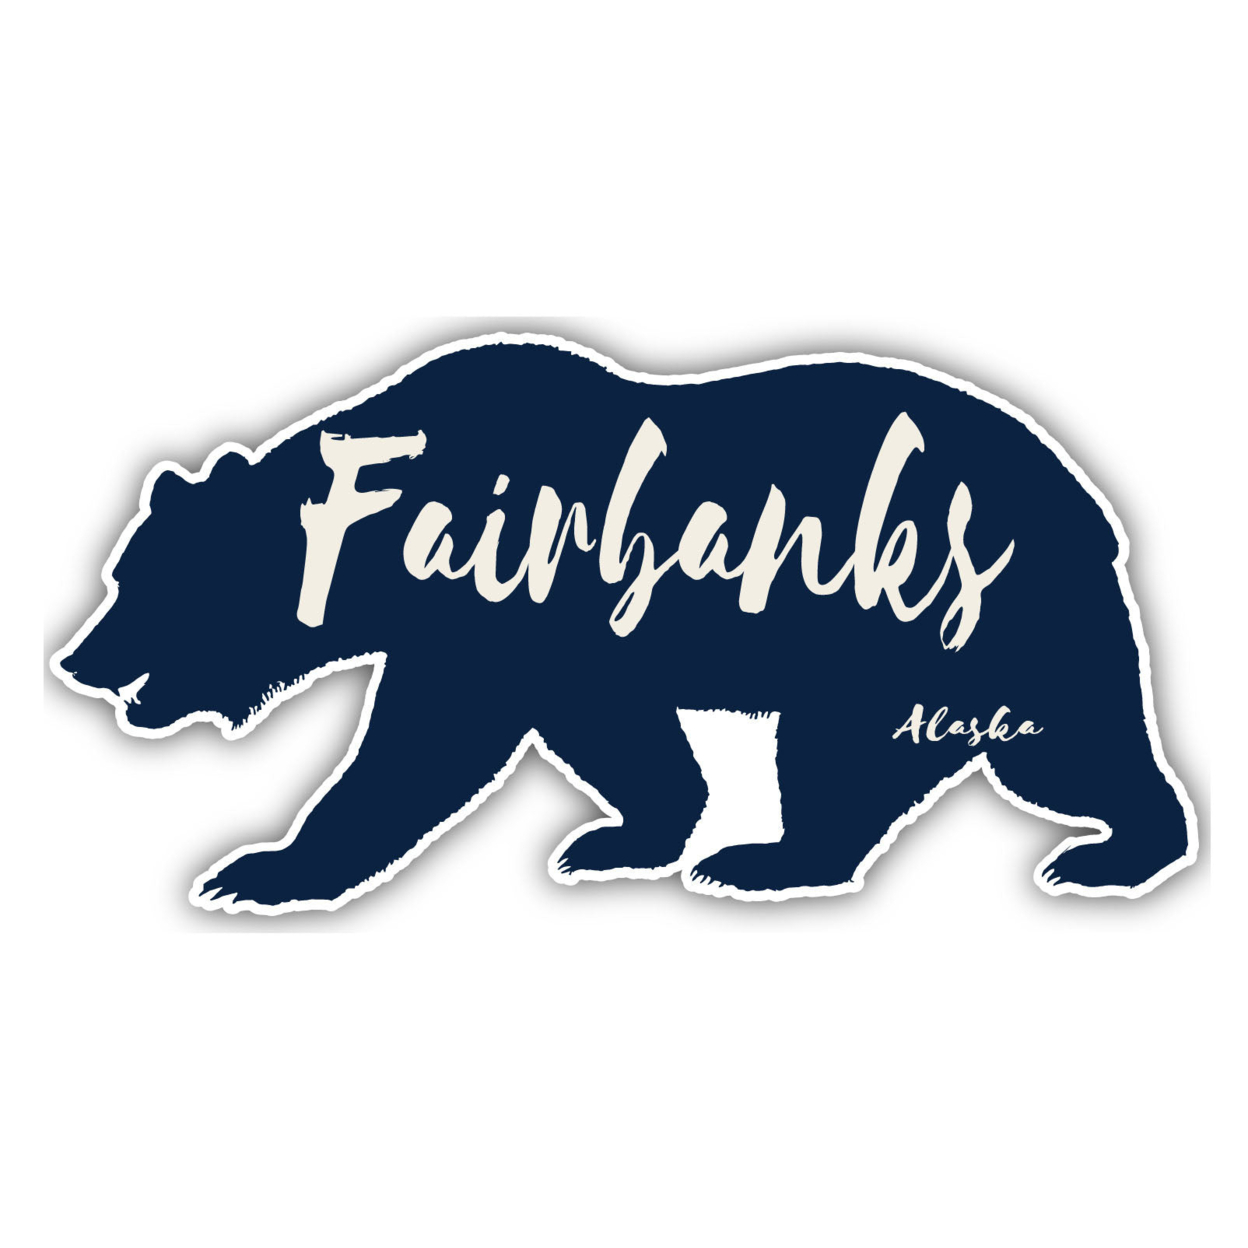 Fairbanks Alaska Souvenir Decorative Stickers (Choose Theme And Size) - 4-Pack, 10-Inch, Bear